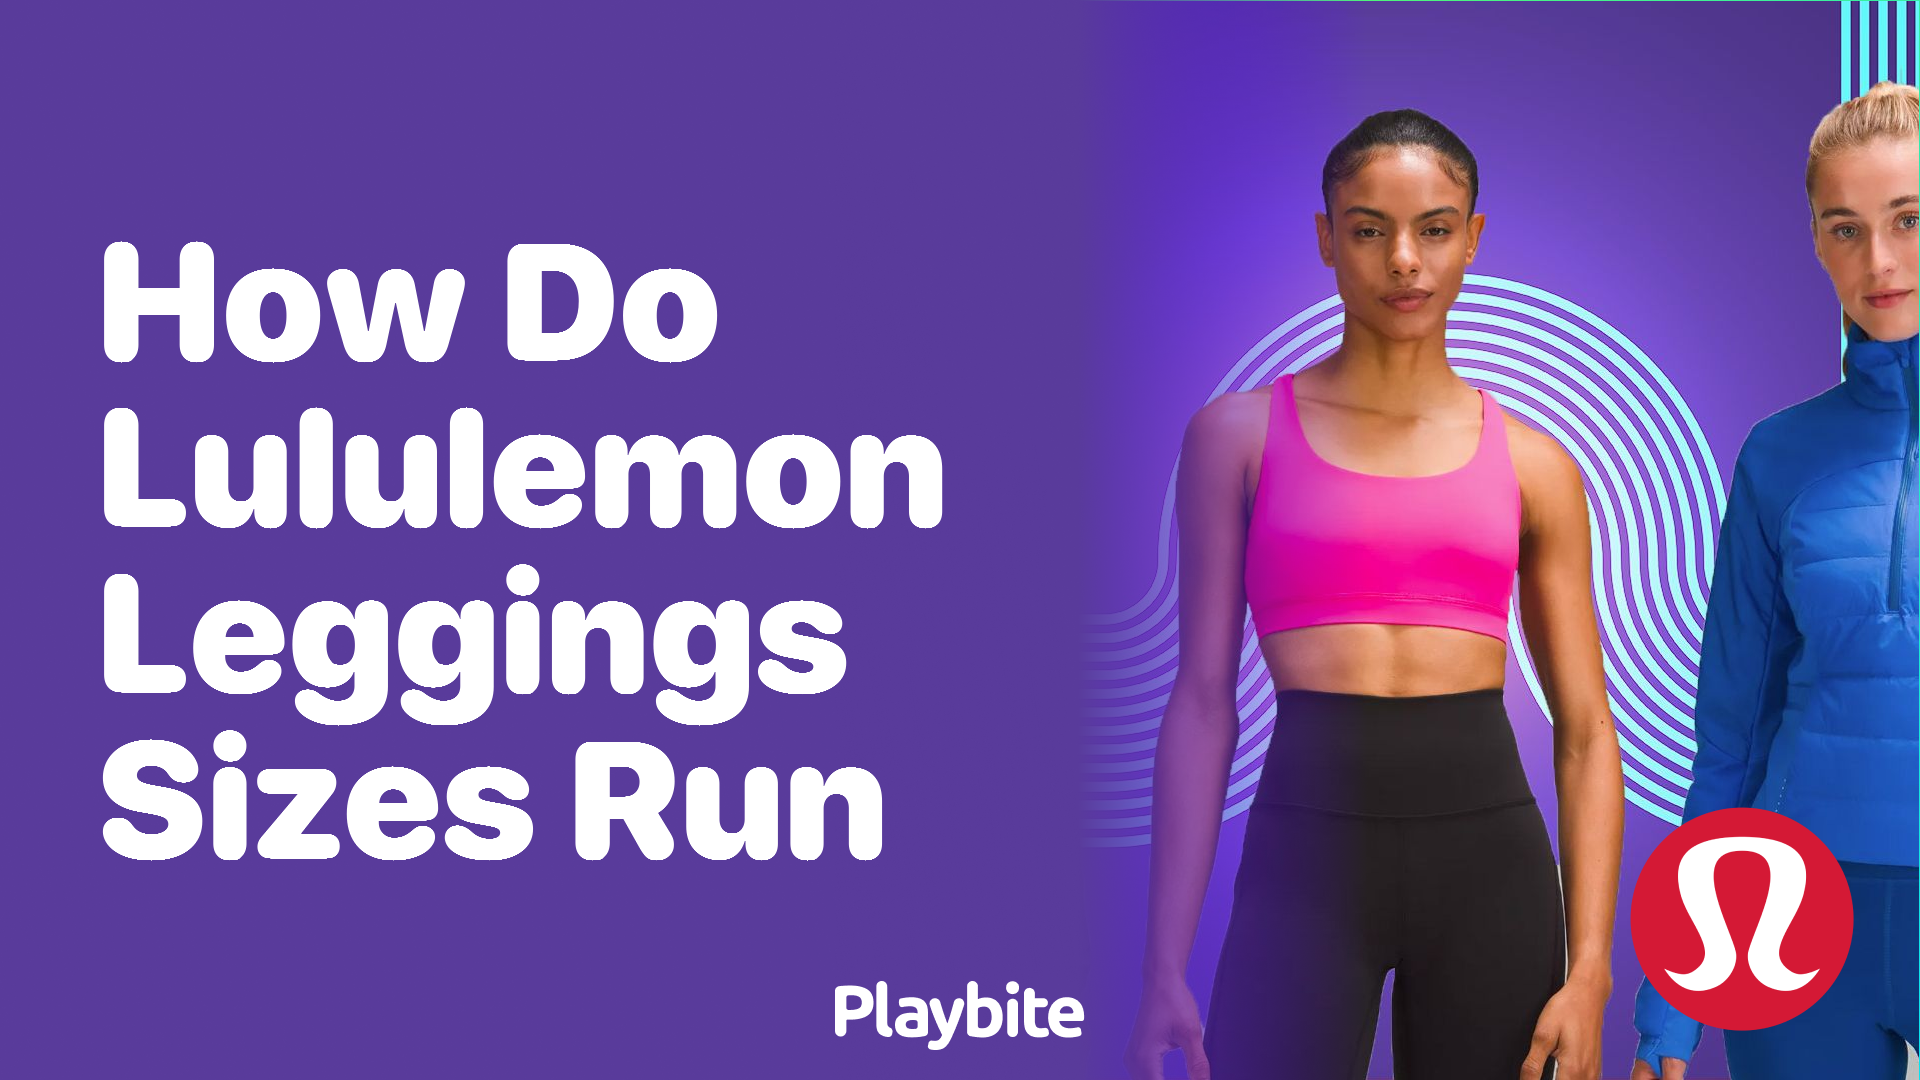 How Do Lululemon Leggings Sizes Run? Find Out Here! - Playbite